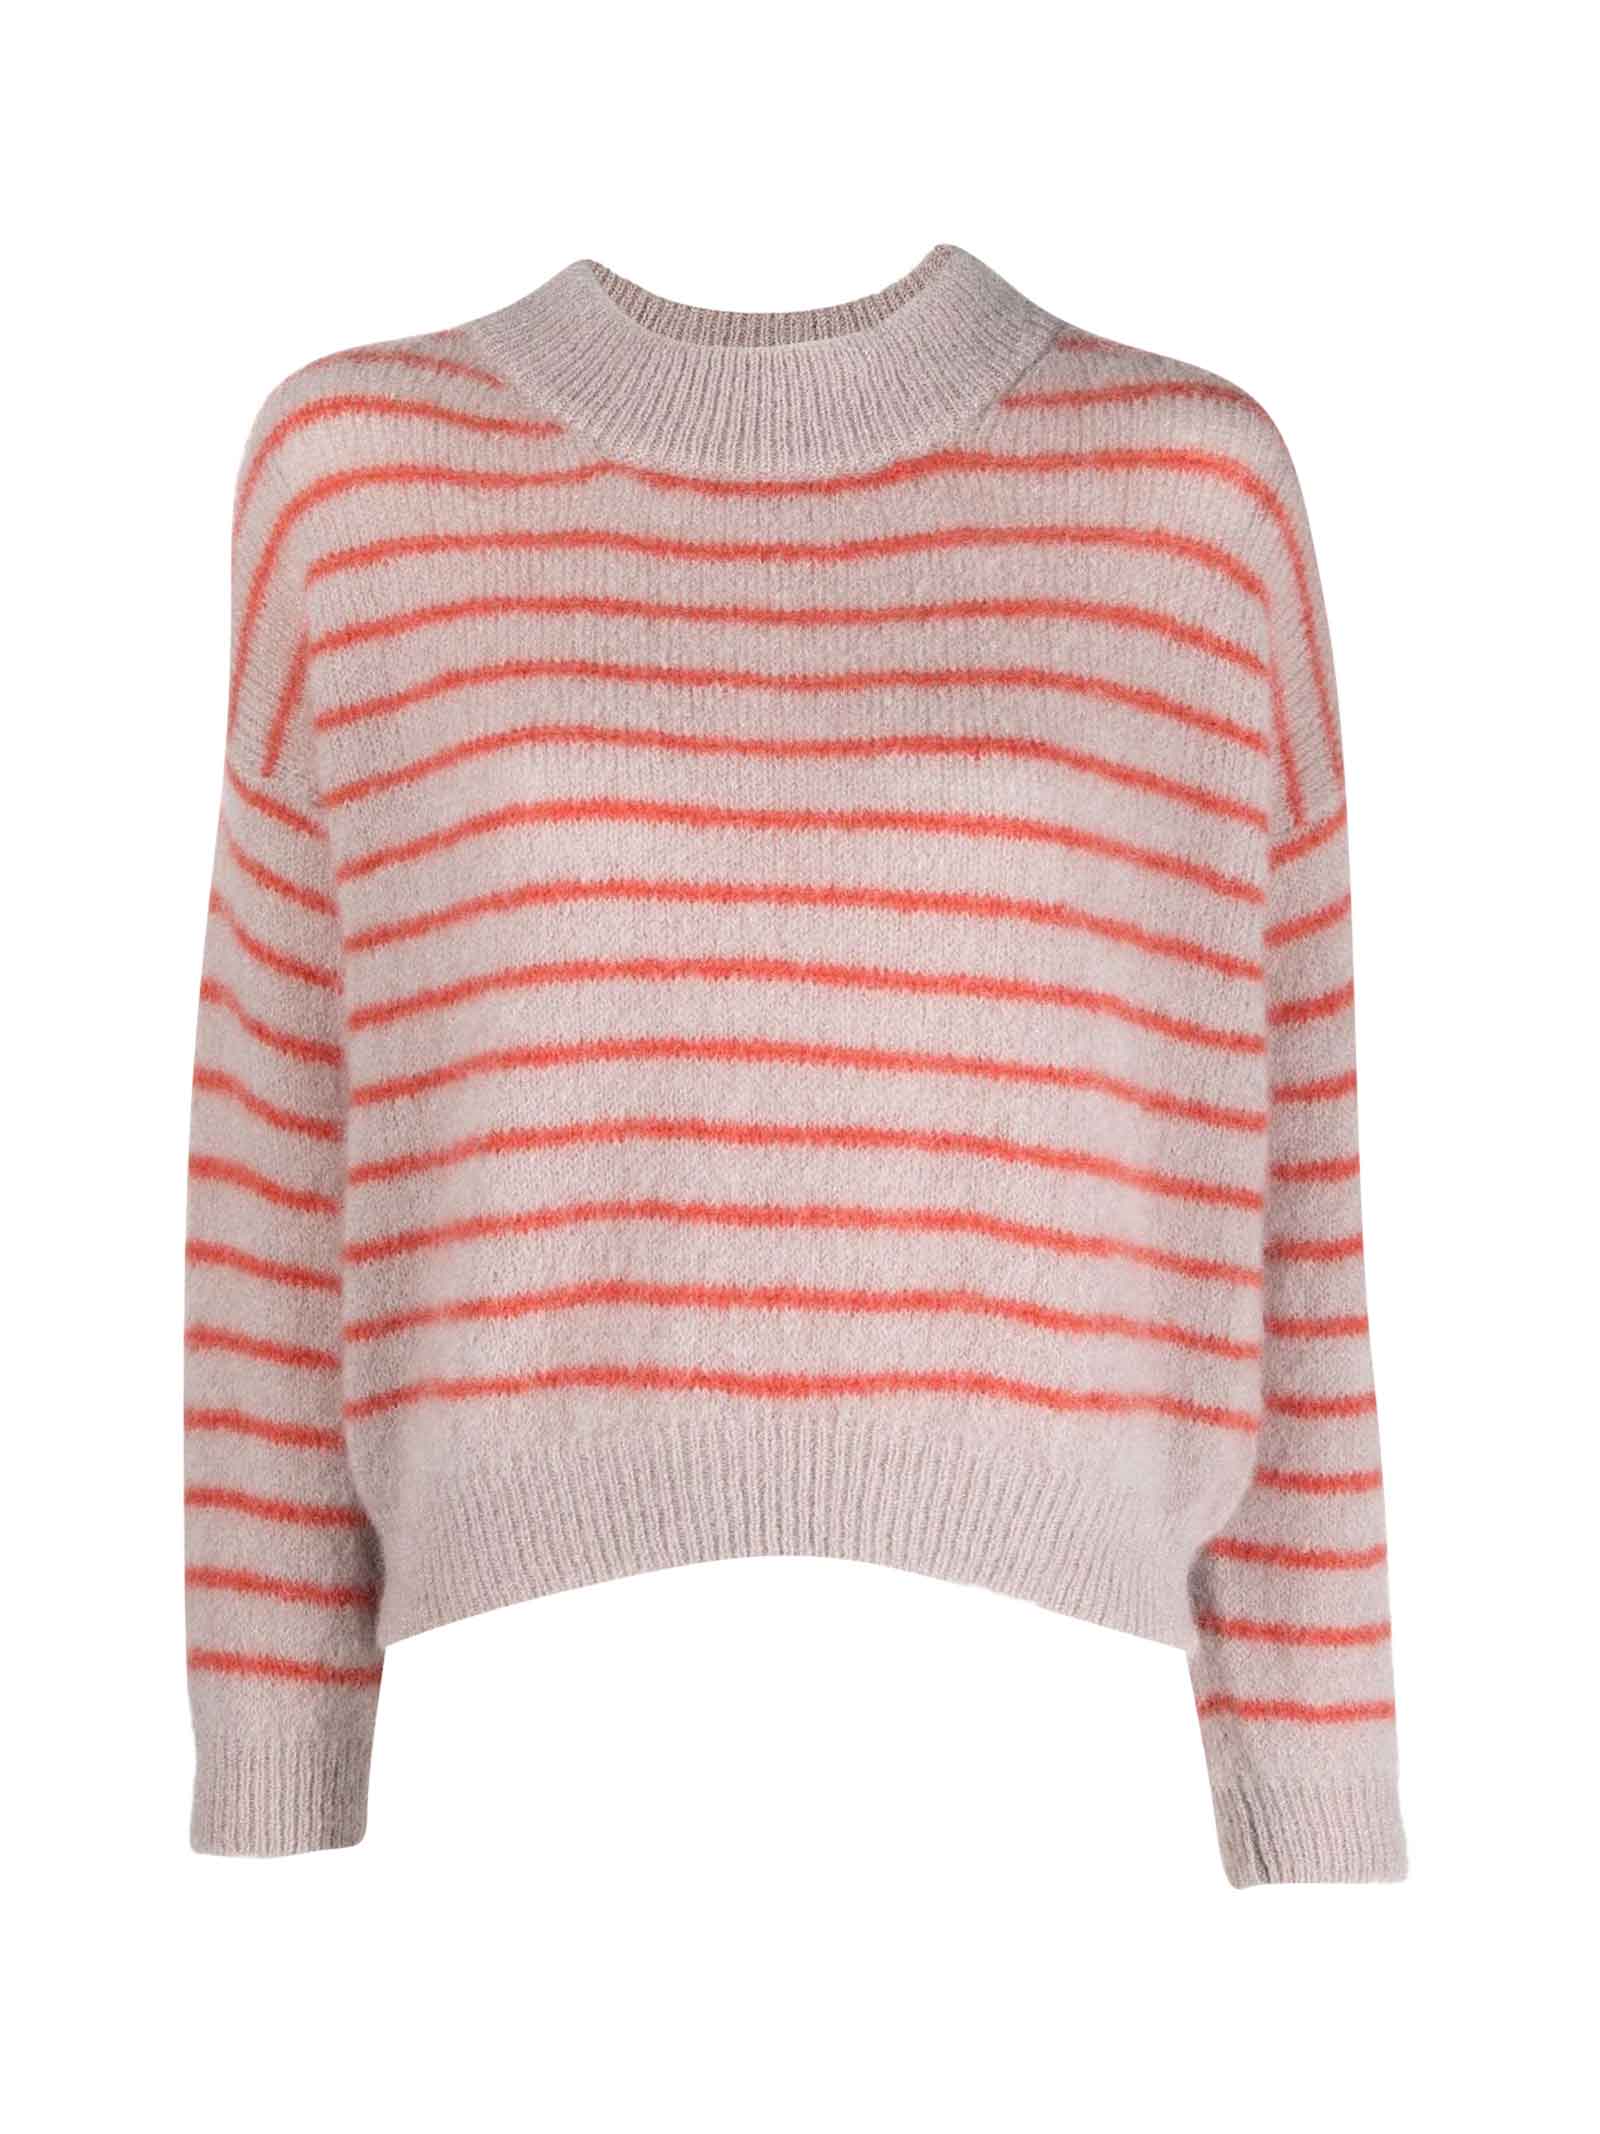 Alysi Womens Beige Striped Sweater